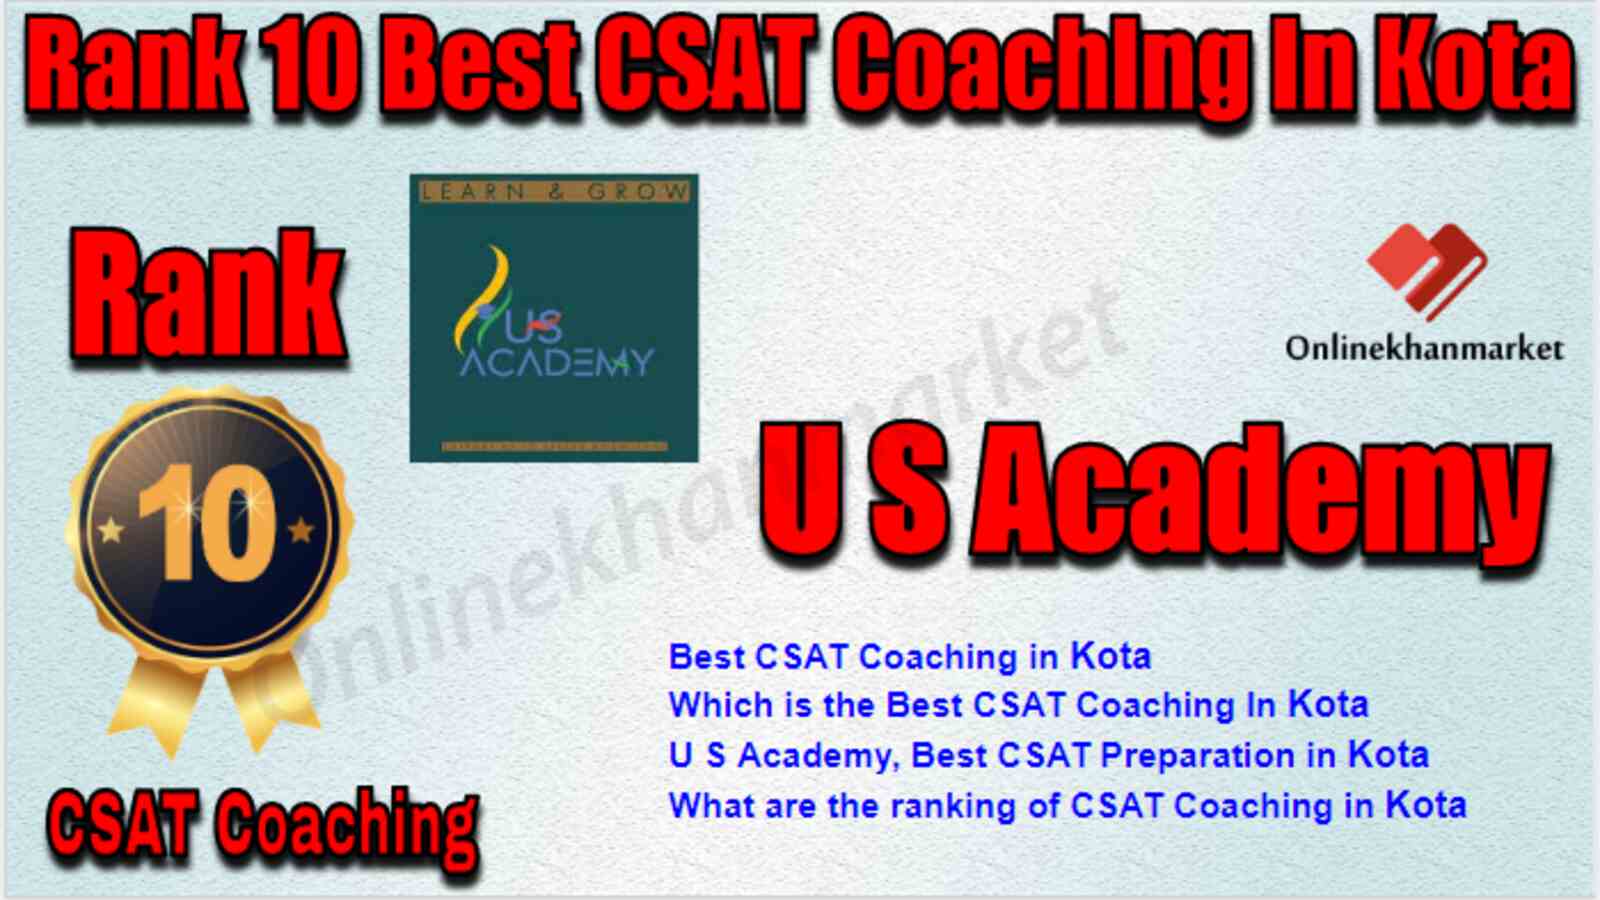 Rank 10 Best CSAT Coaching in Kota